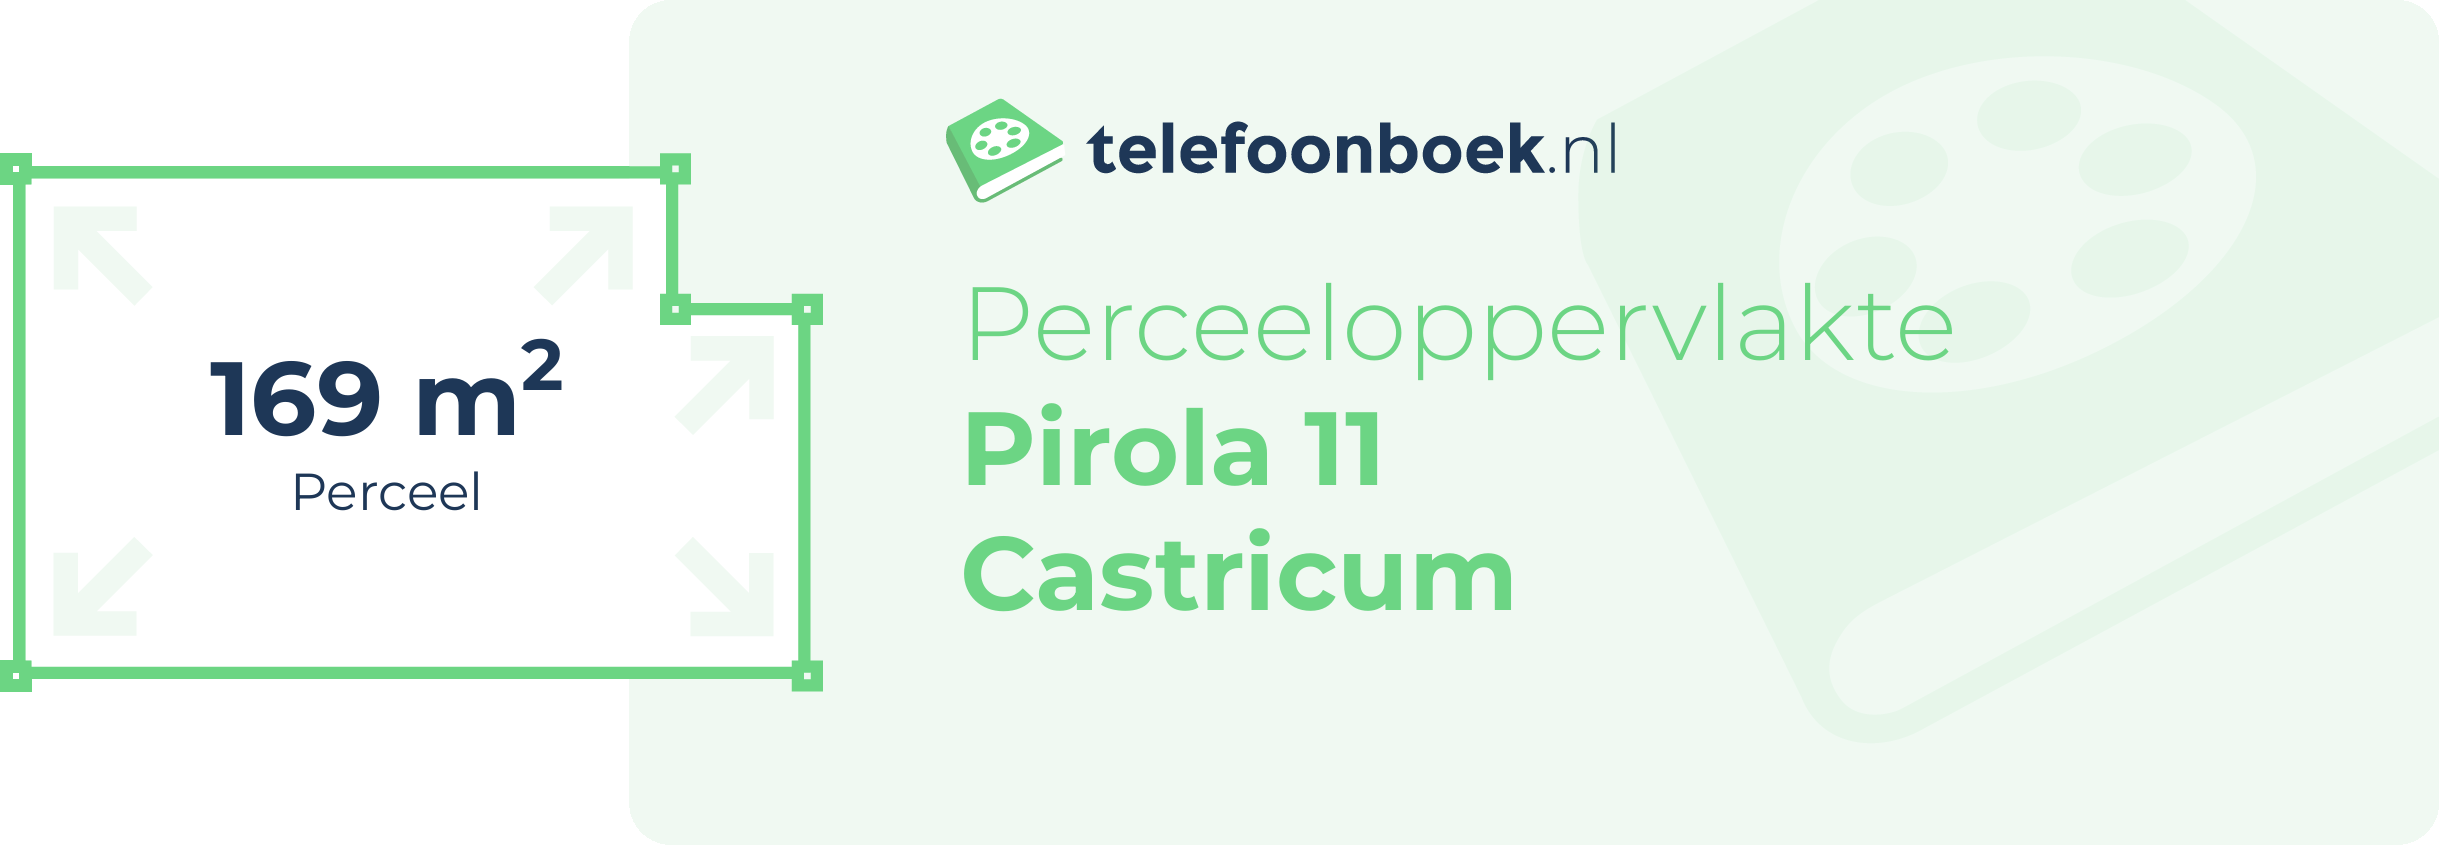 Perceeloppervlakte Pirola 11 Castricum